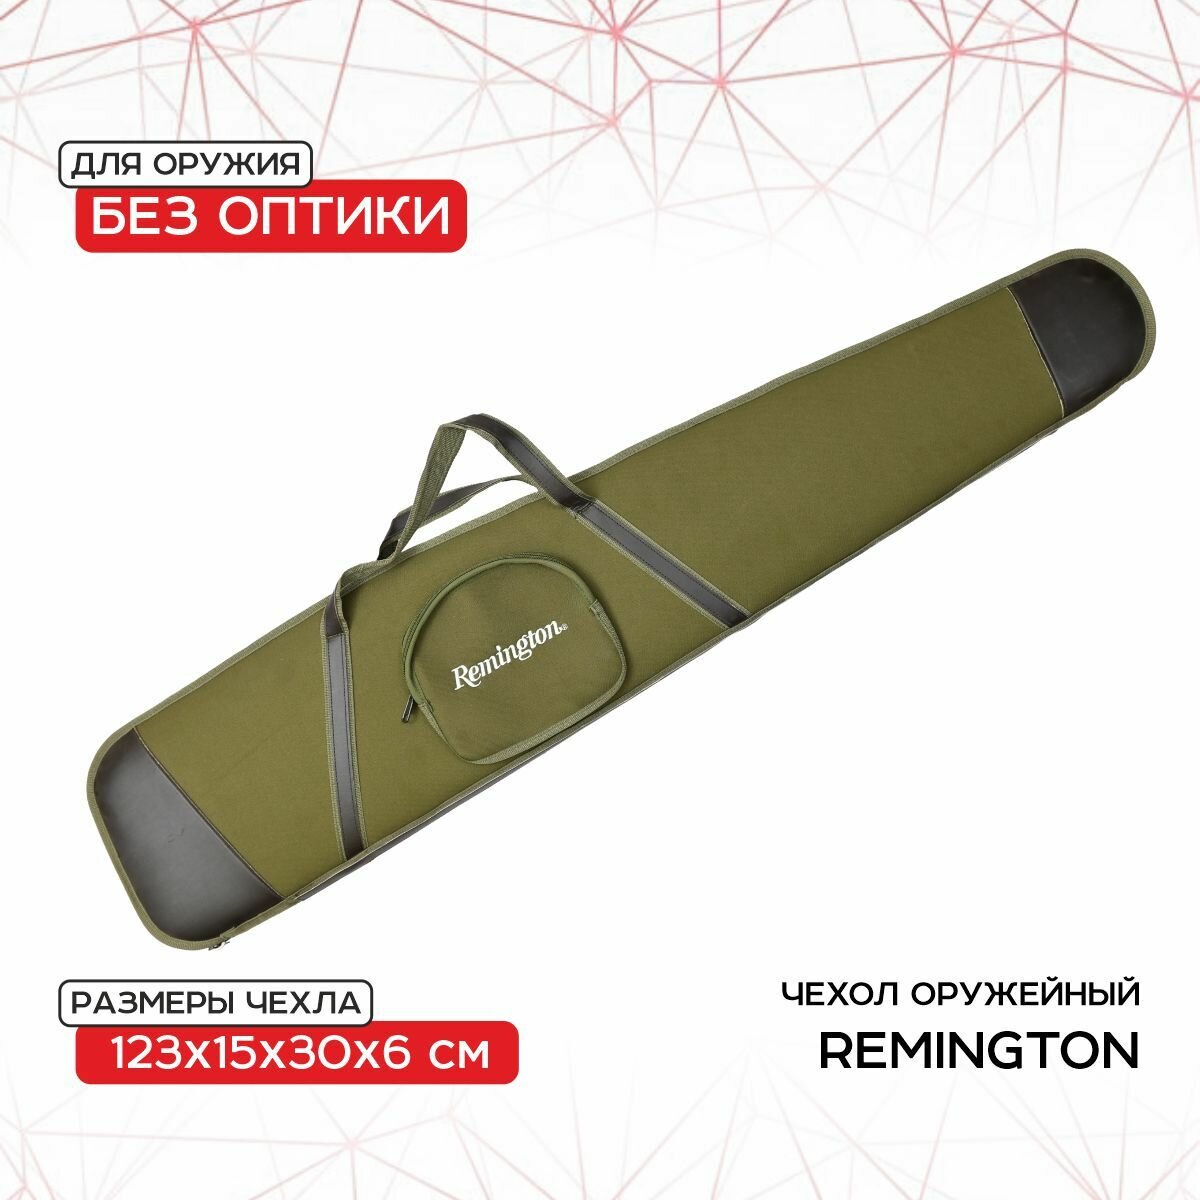 Чехол оружейный Remington без оптики 123х15х30х6 (зеленый) GB-9050B123